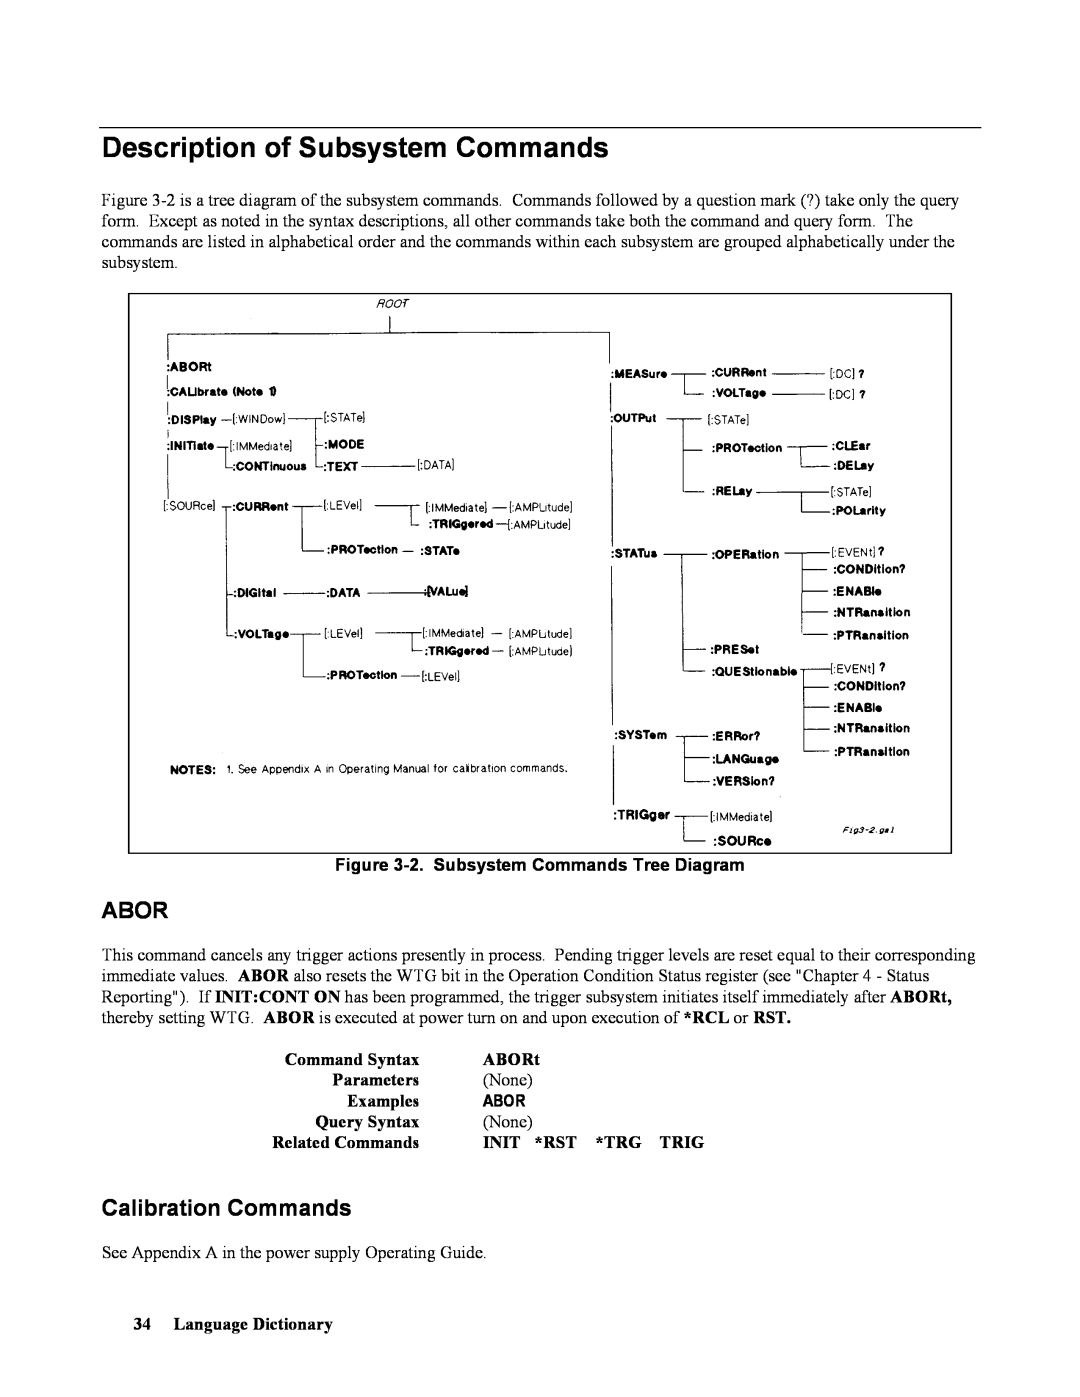 Agilent Technologies 668xA, 665xA, 664xA, 667xA, 669xA manual Description of Subsystem Commands, Abor, Calibration Commands 